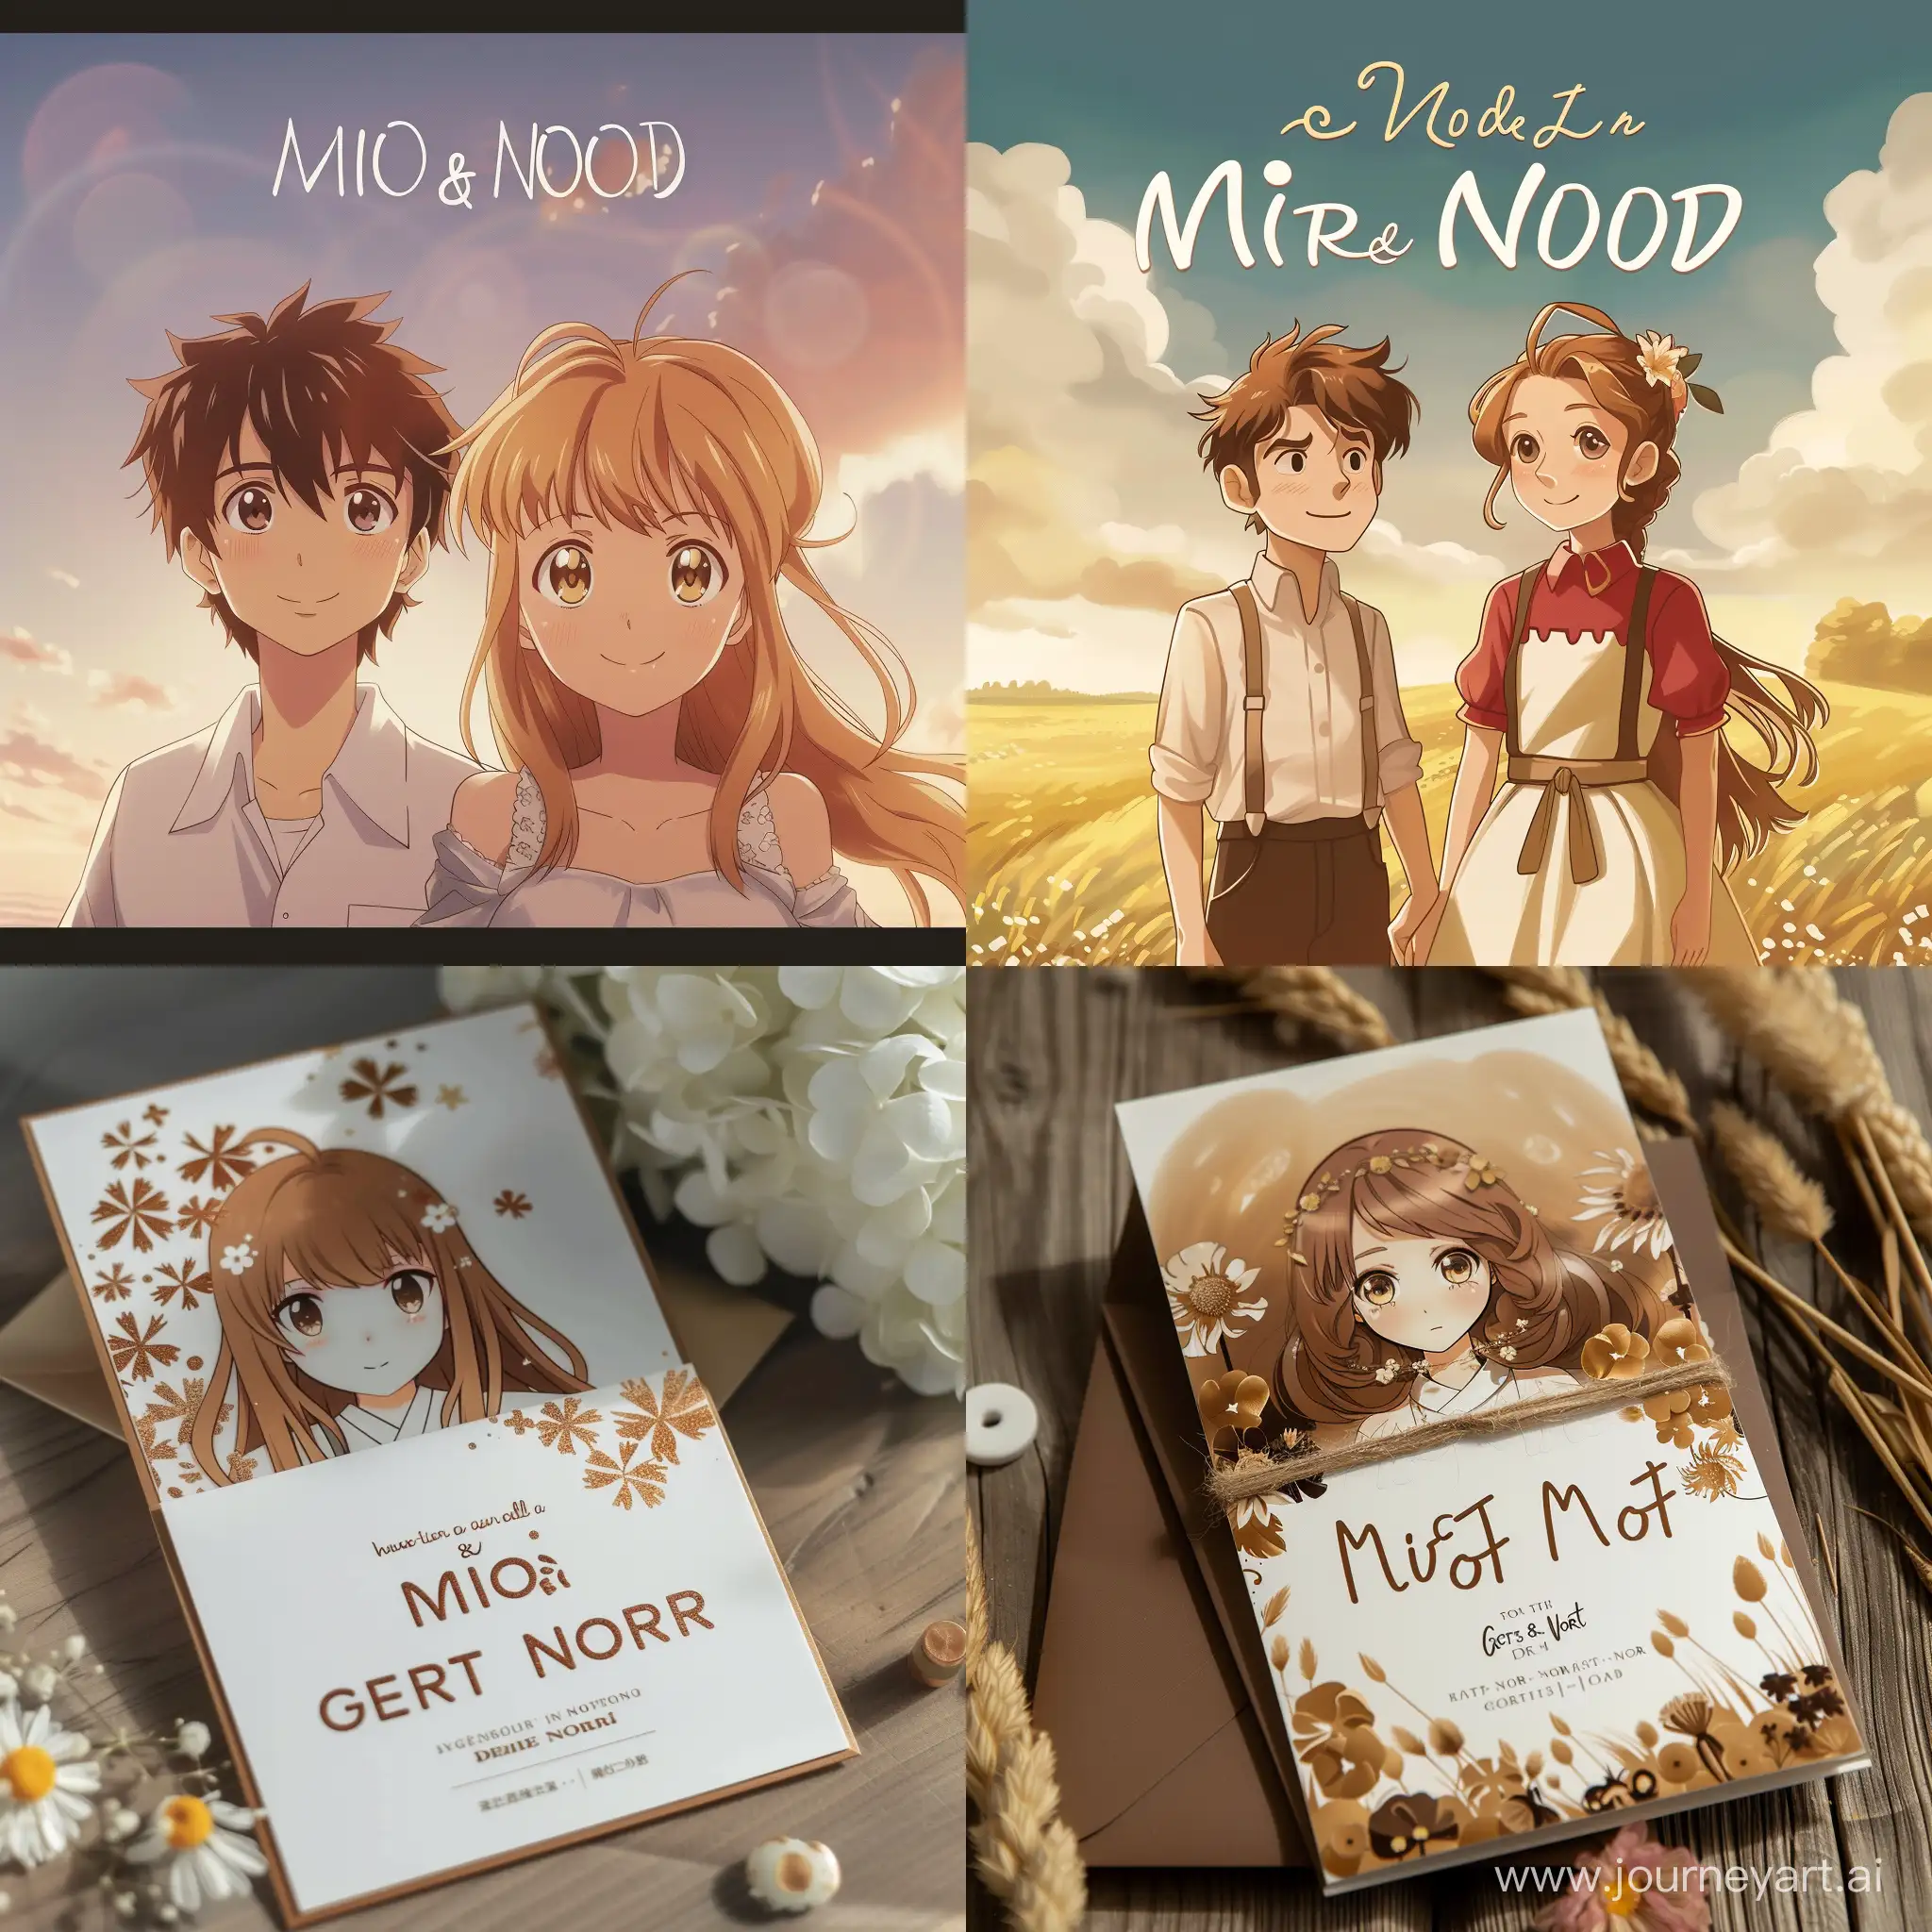 Elegant-Anime-Wedding-Invitation-Featuring-Mio-Nord-and-Gertz-Nord